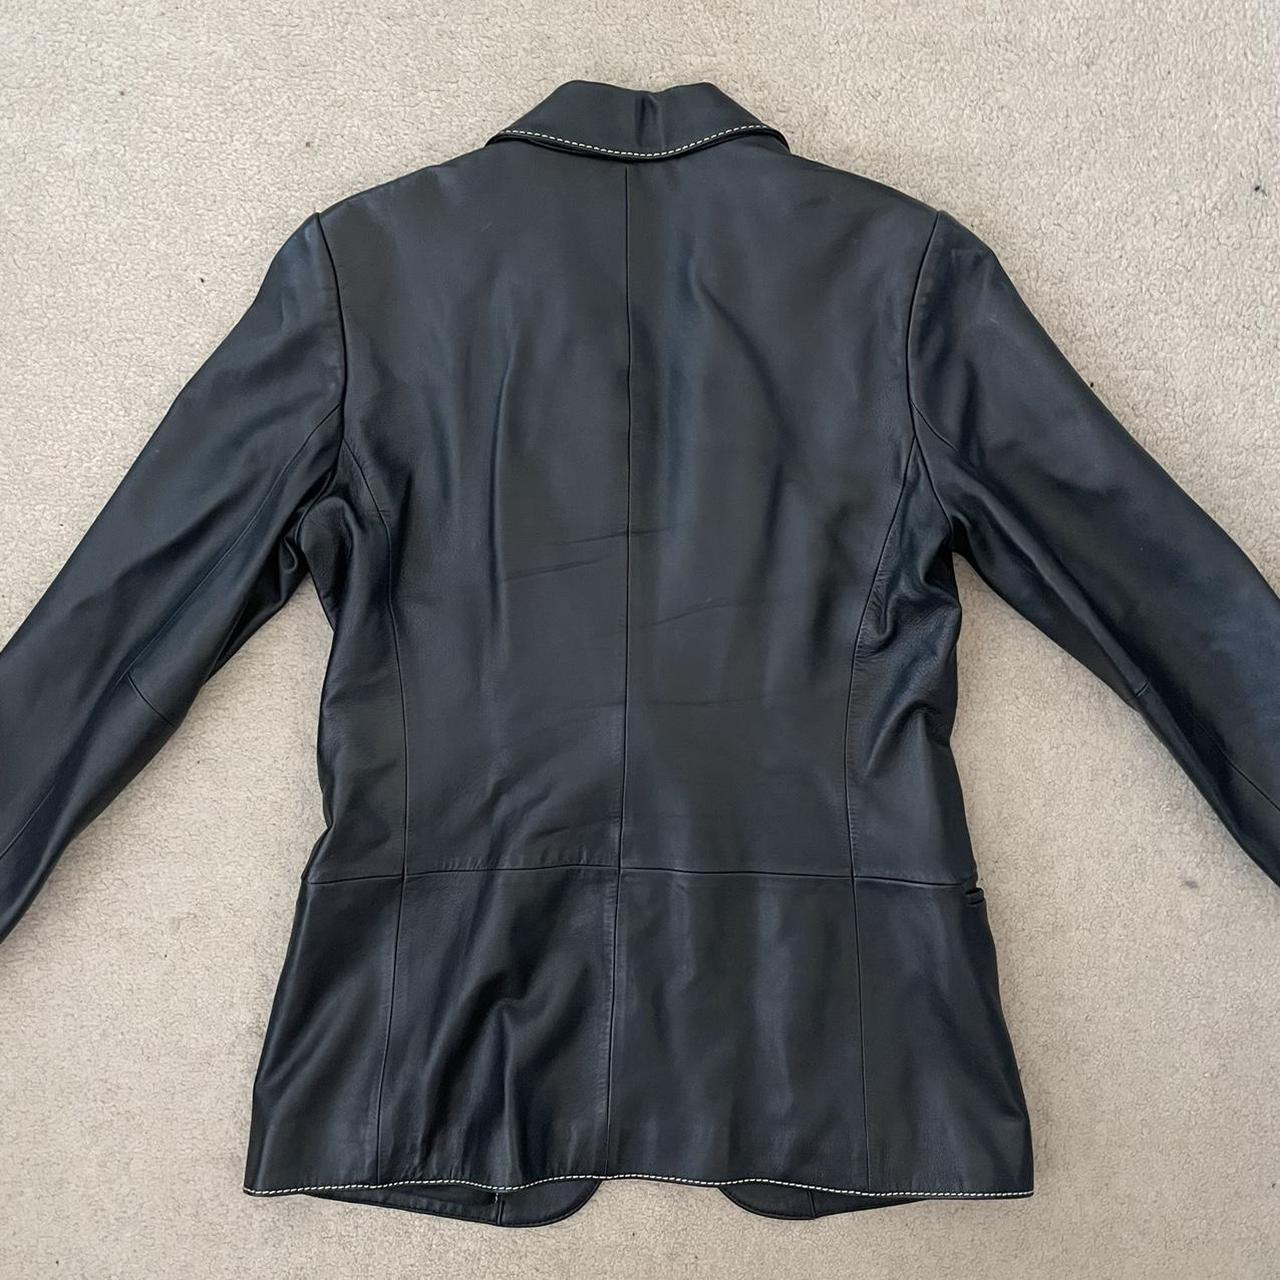 Black button up faux leather jacket DISCOUNTS ON... - Depop